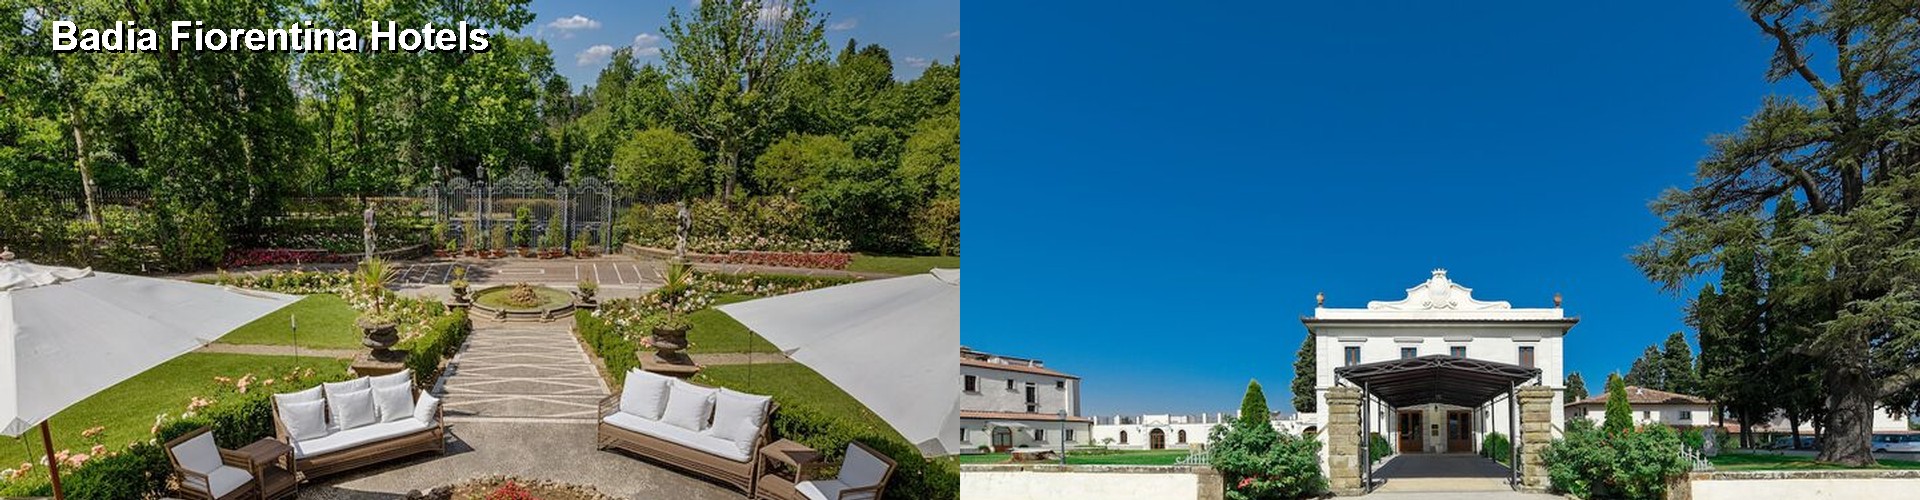 5 Best Hotels near Badia Fiorentina